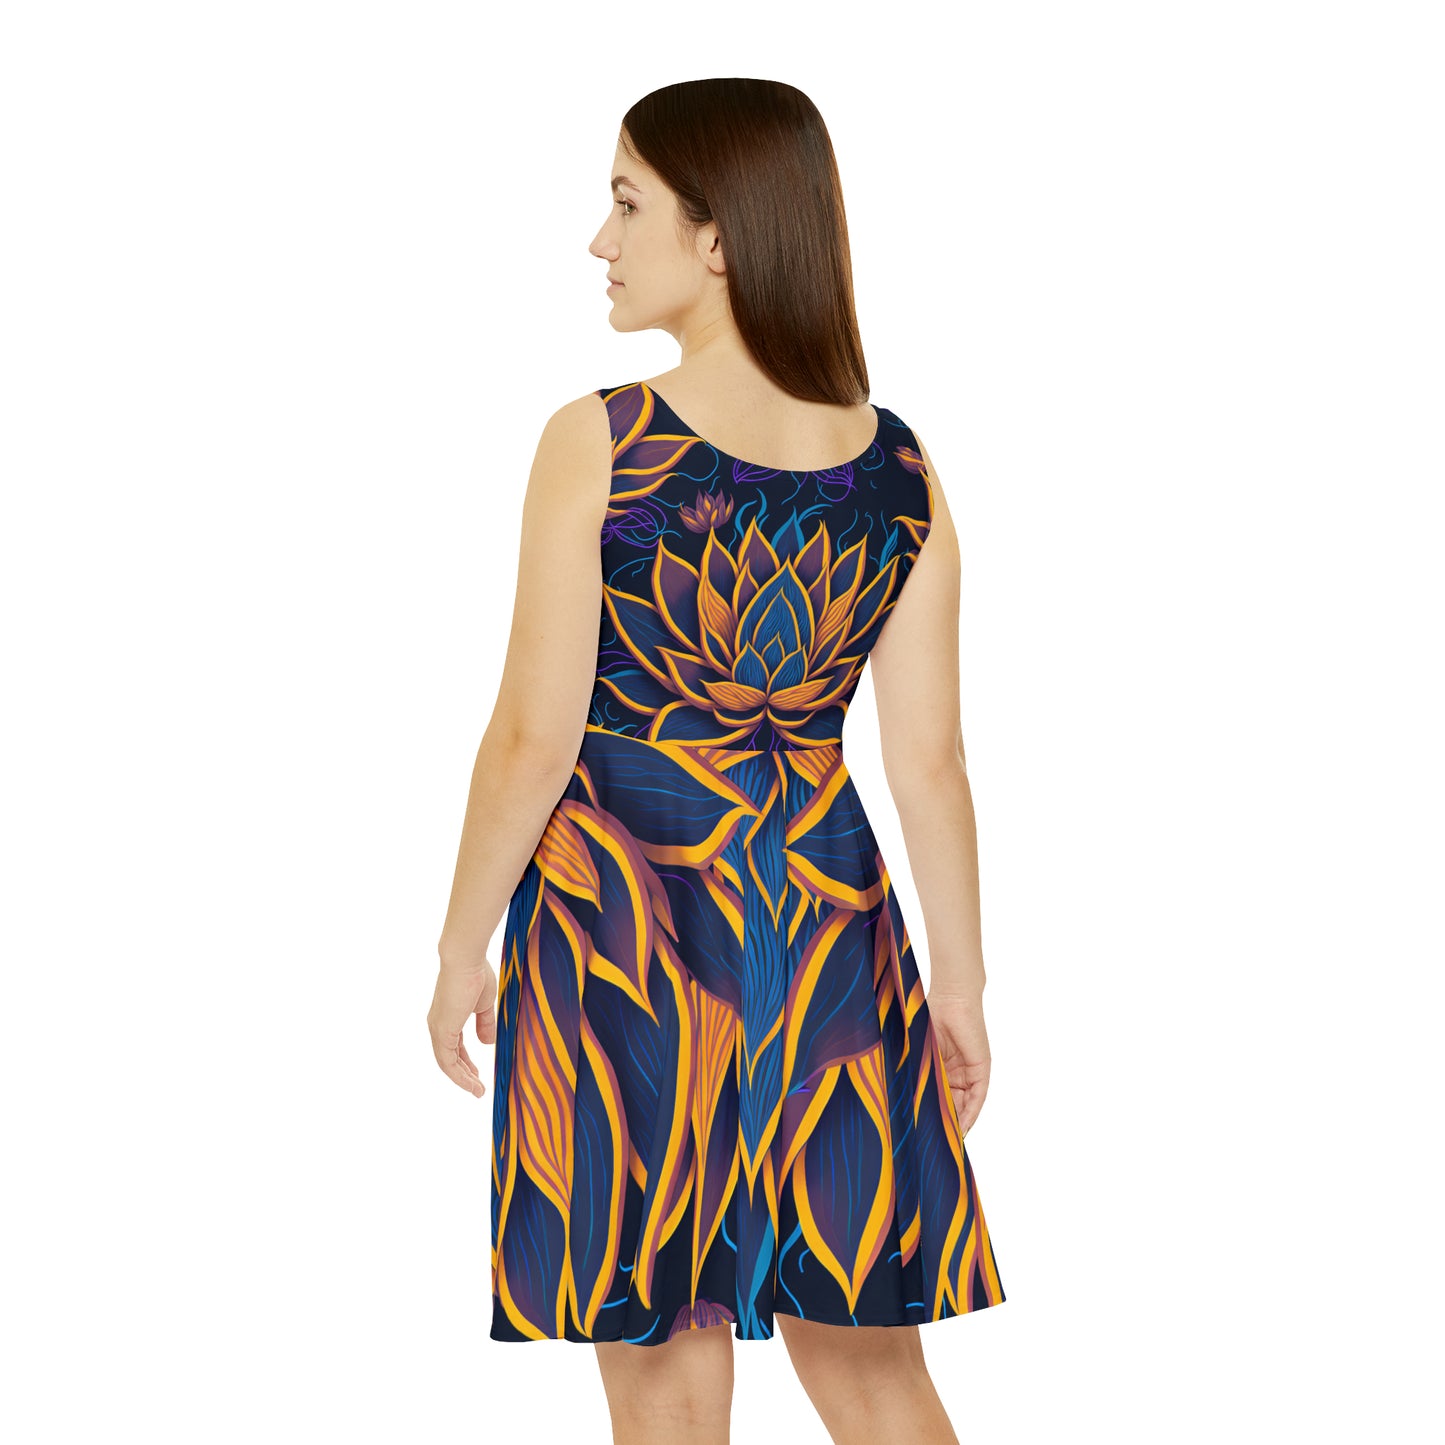 Illuminating Elegance: The Radiant Lotus Dress v2